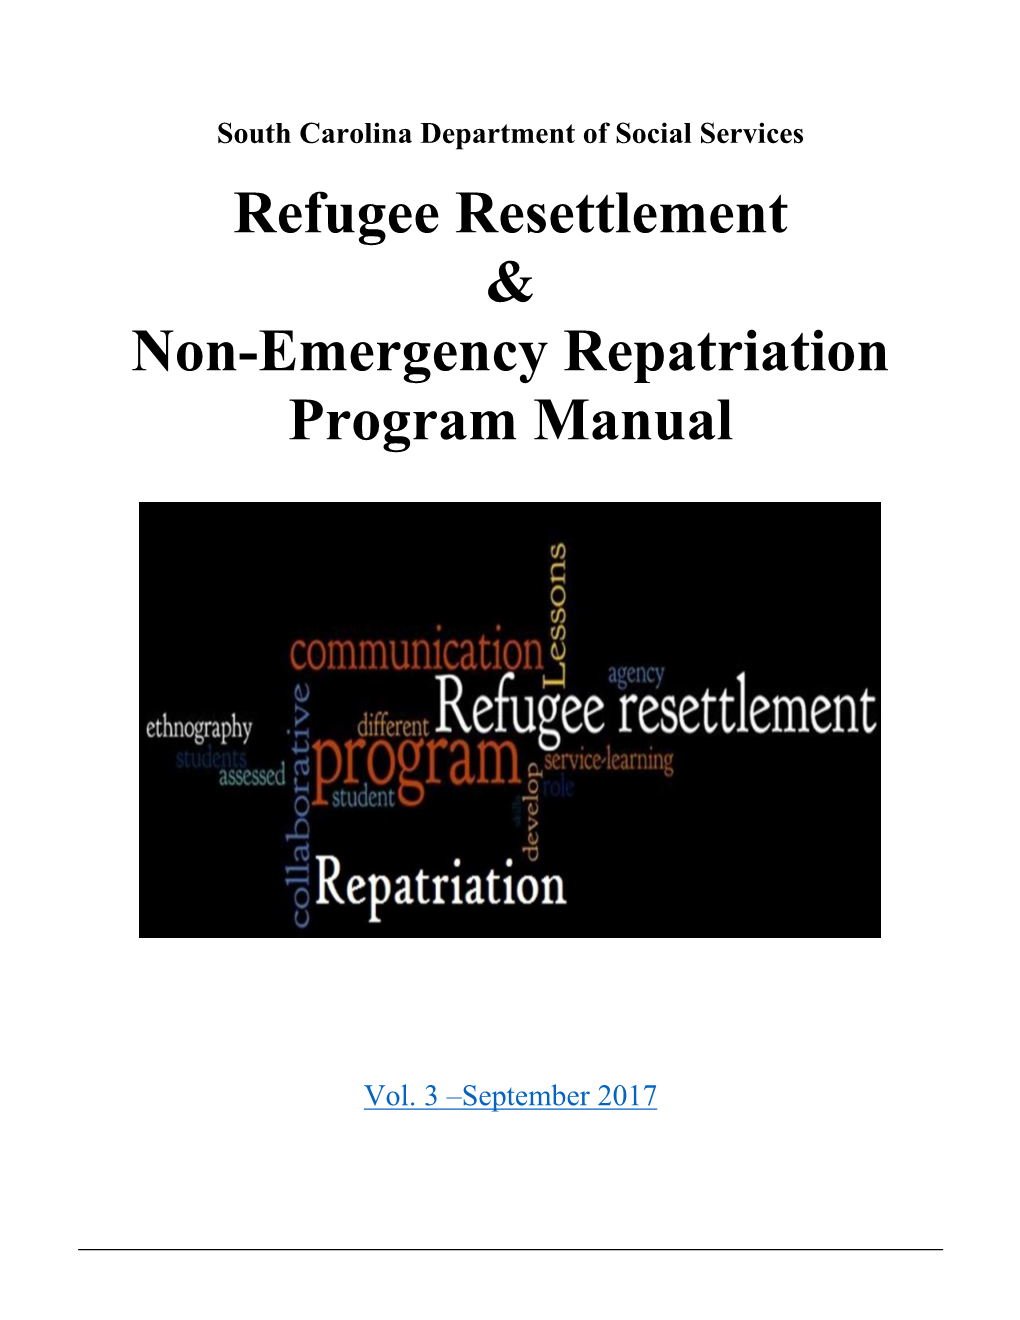 Refugee Resettlement & Non-Emergency Repatriation